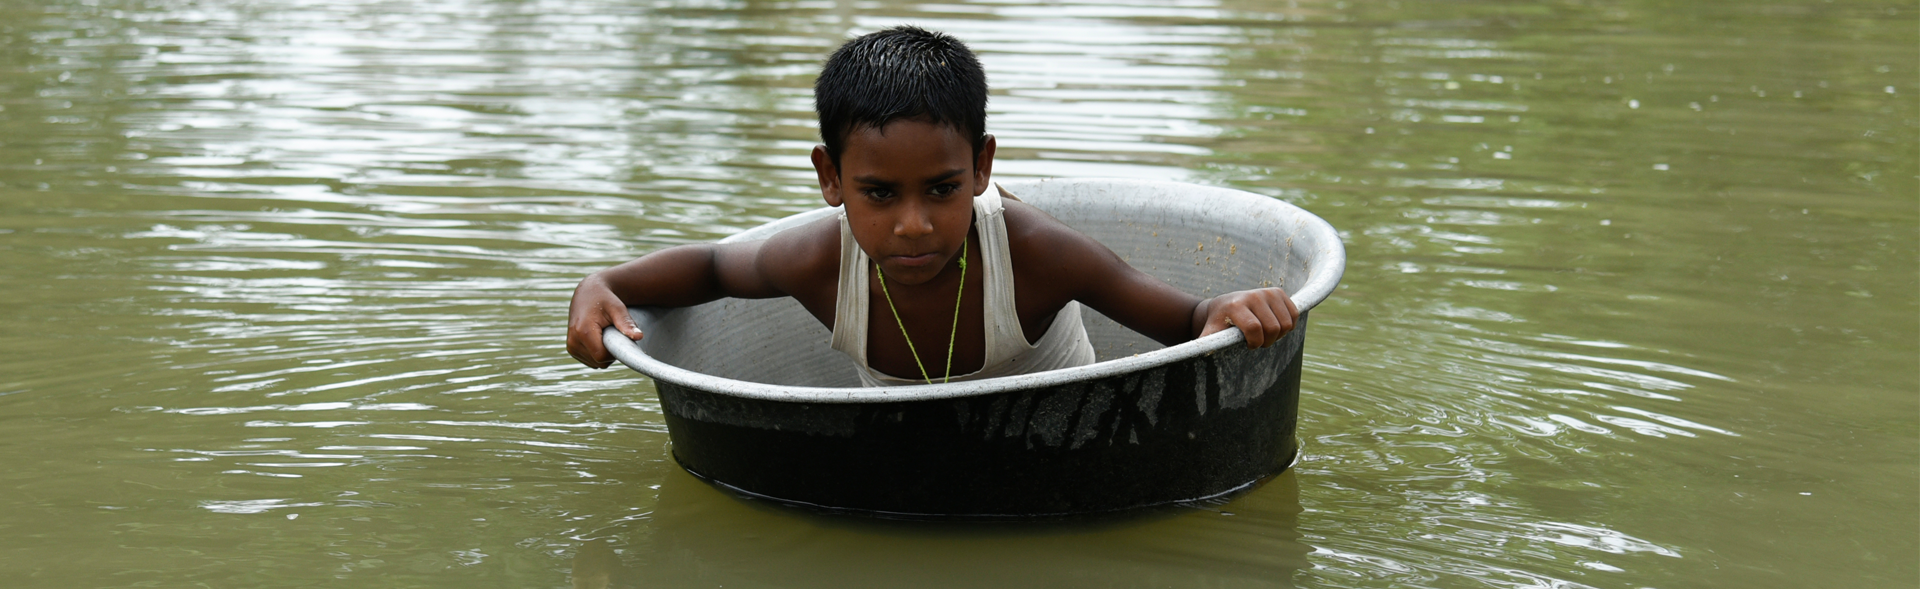 222 million children in India face double threat of climate disaster and crushing poverty: Report by Bal Raksha Bharat - Bal Raksha Bharat